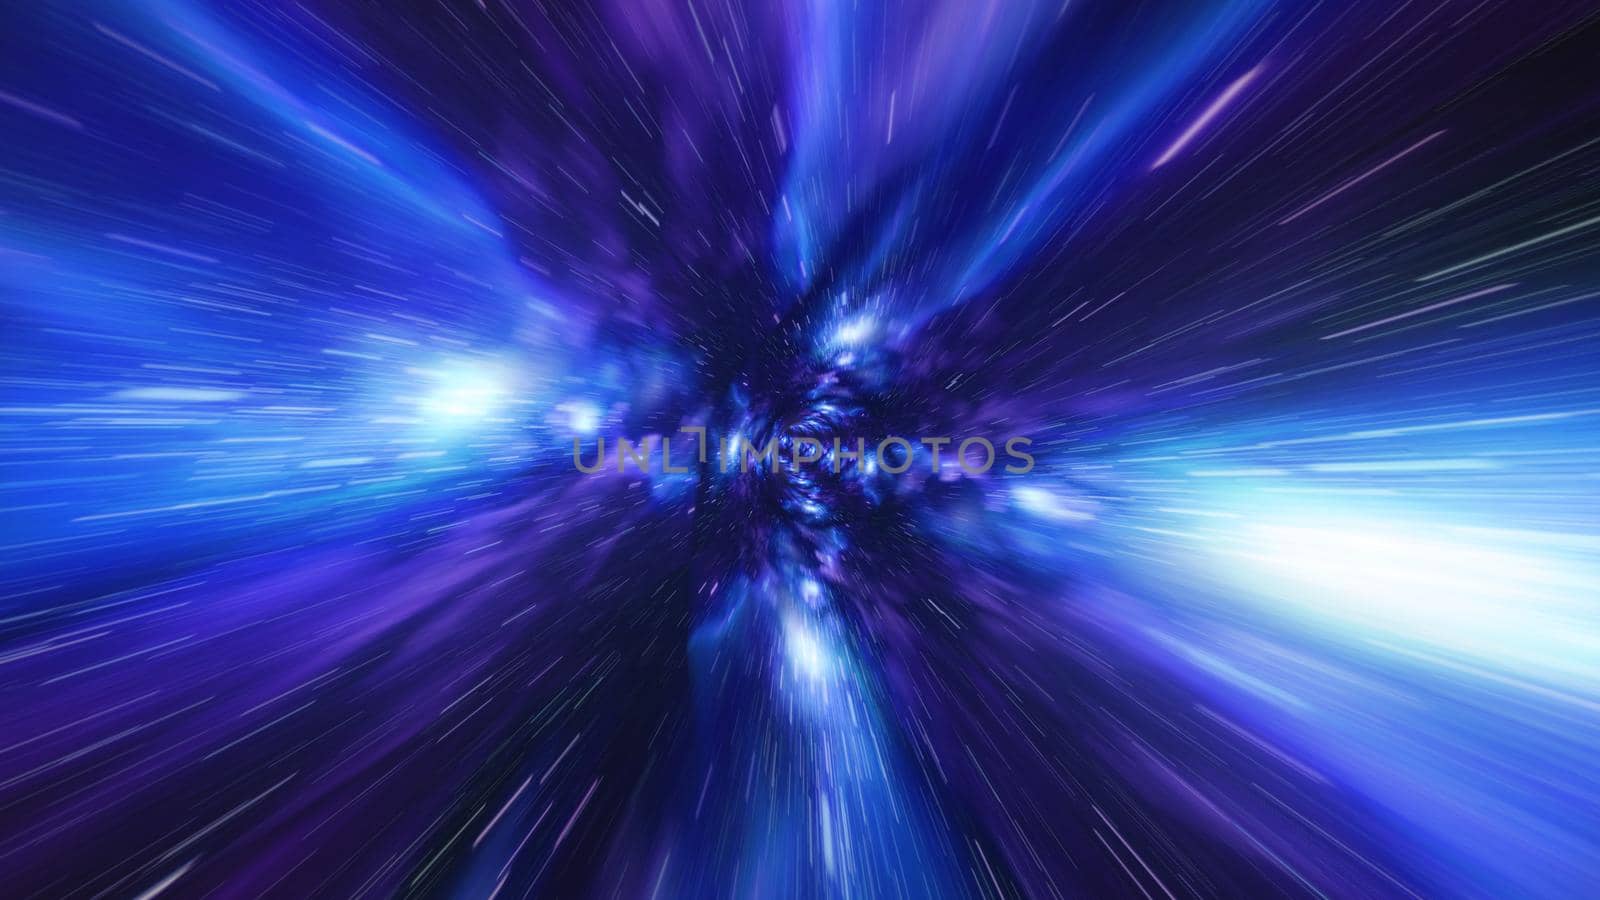 Jump in Time vortex tunnel blue galaxy background by studiodav